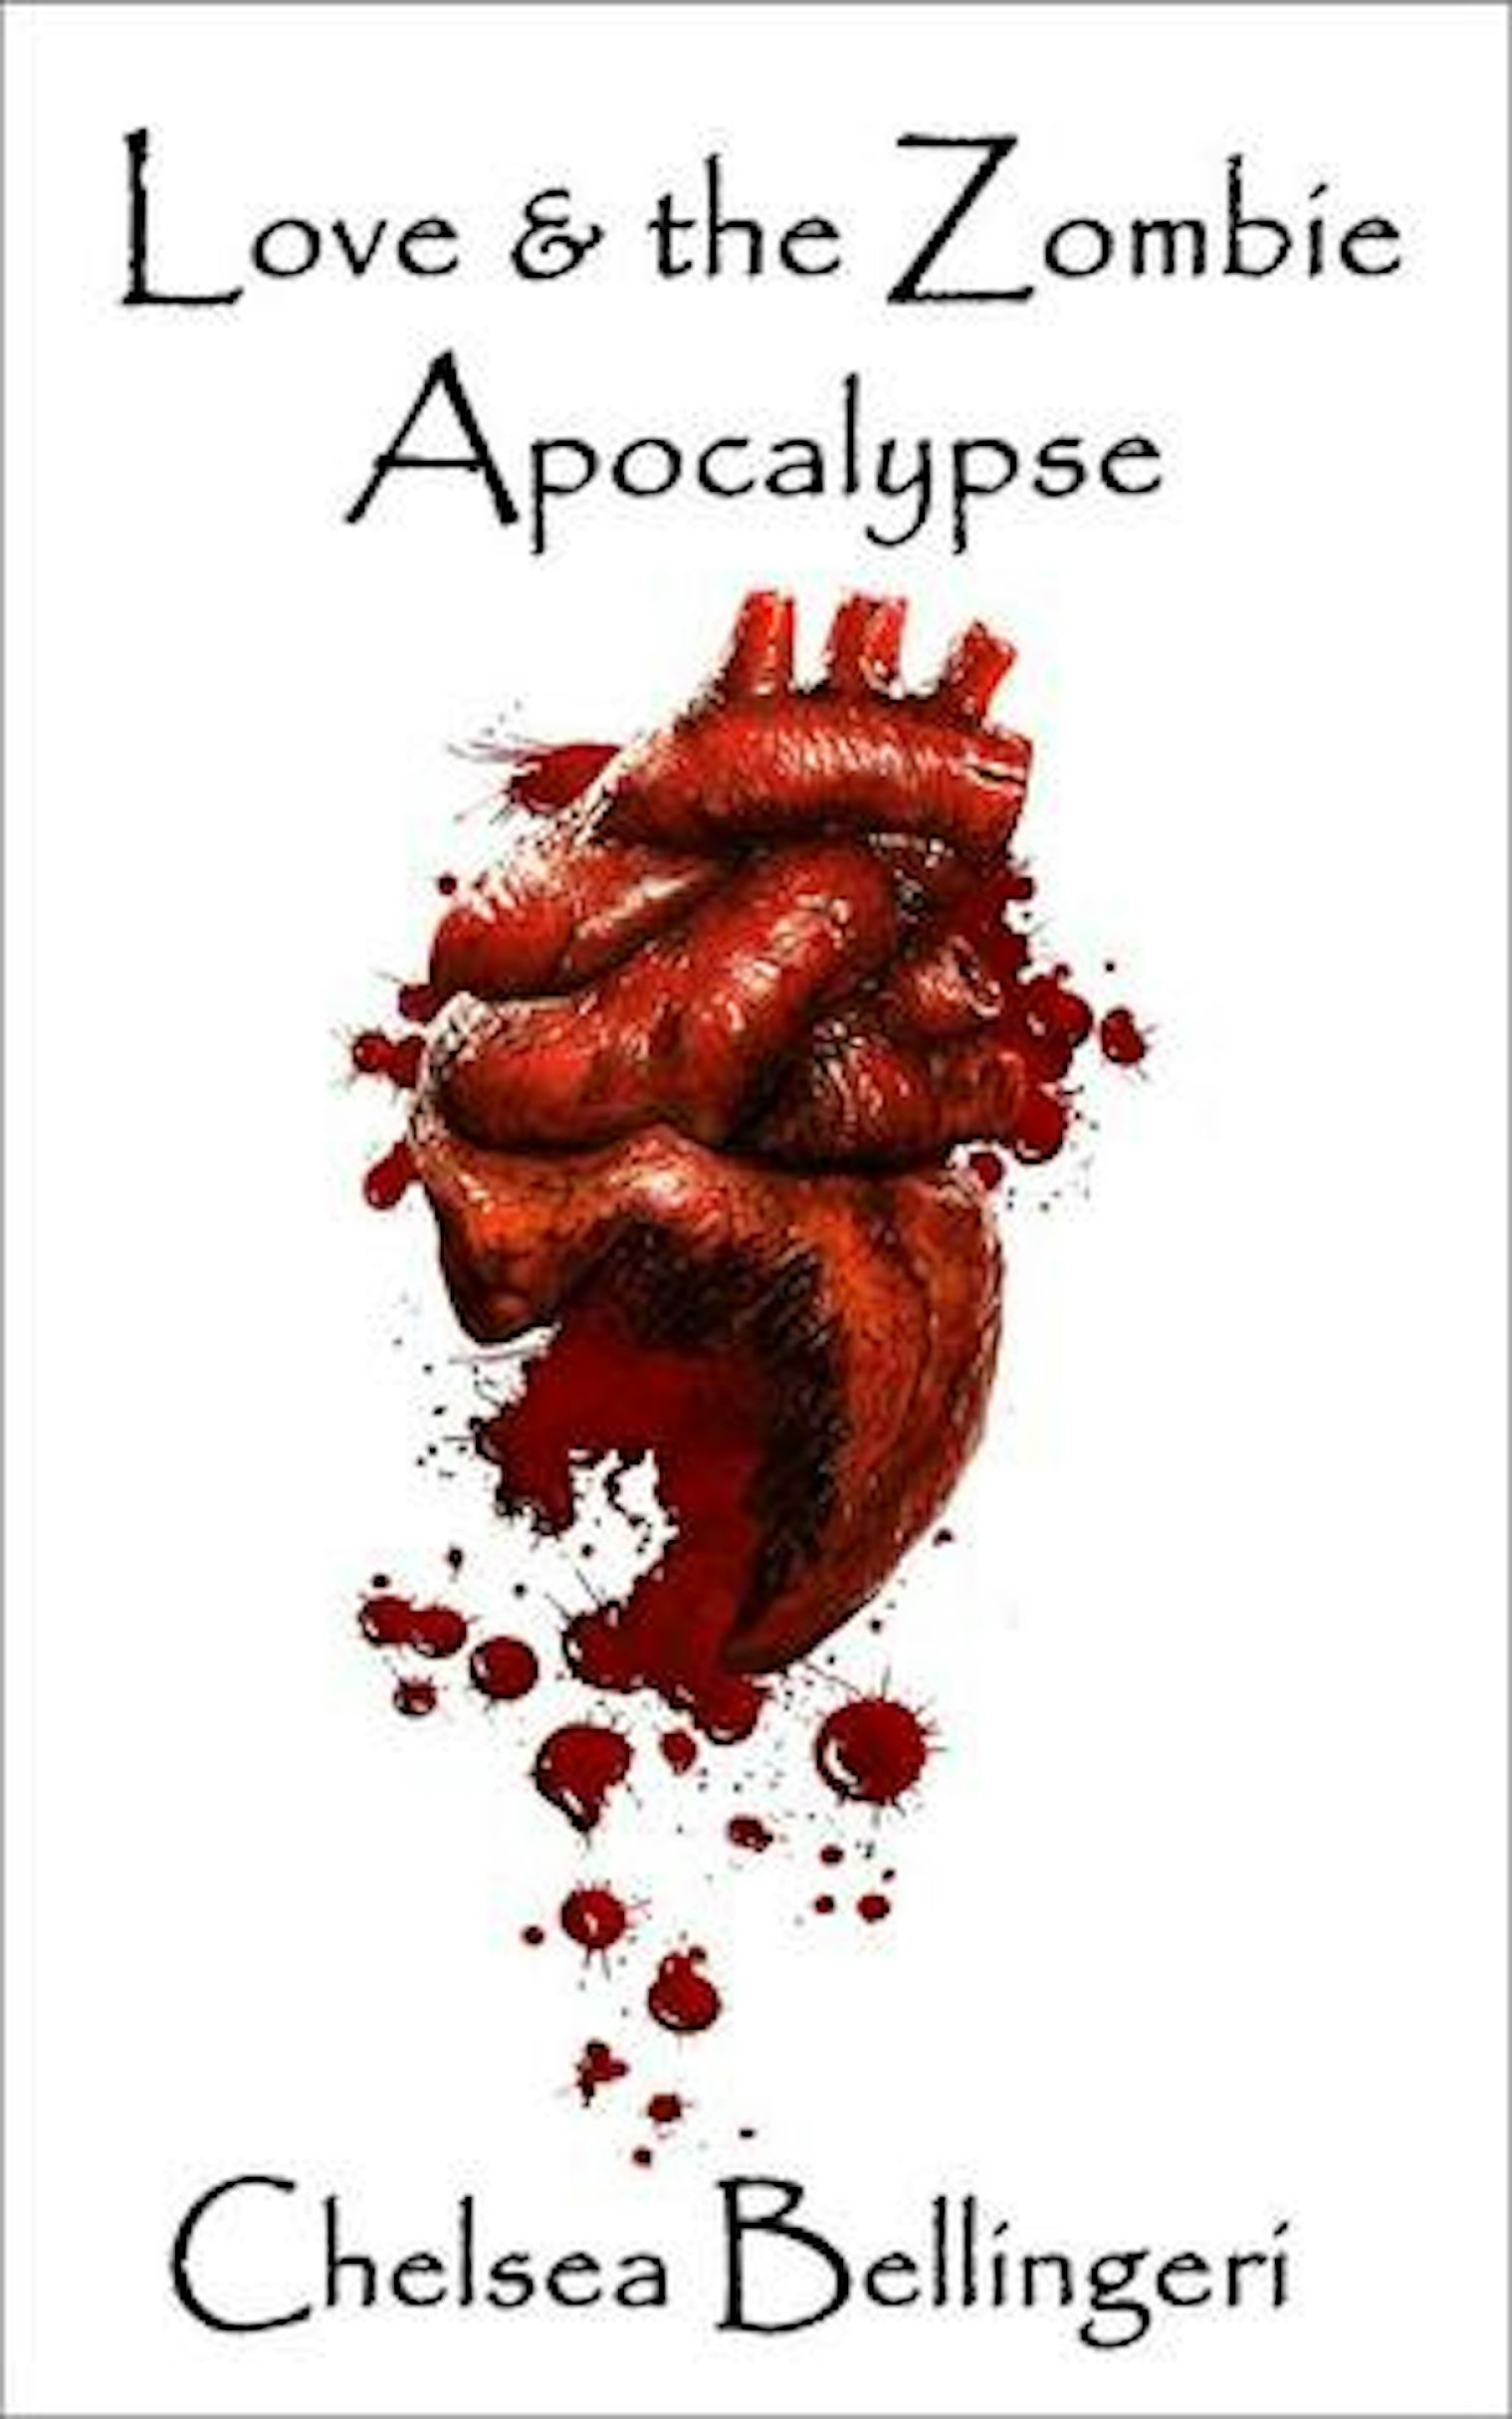 books about zombie apocalypse romance